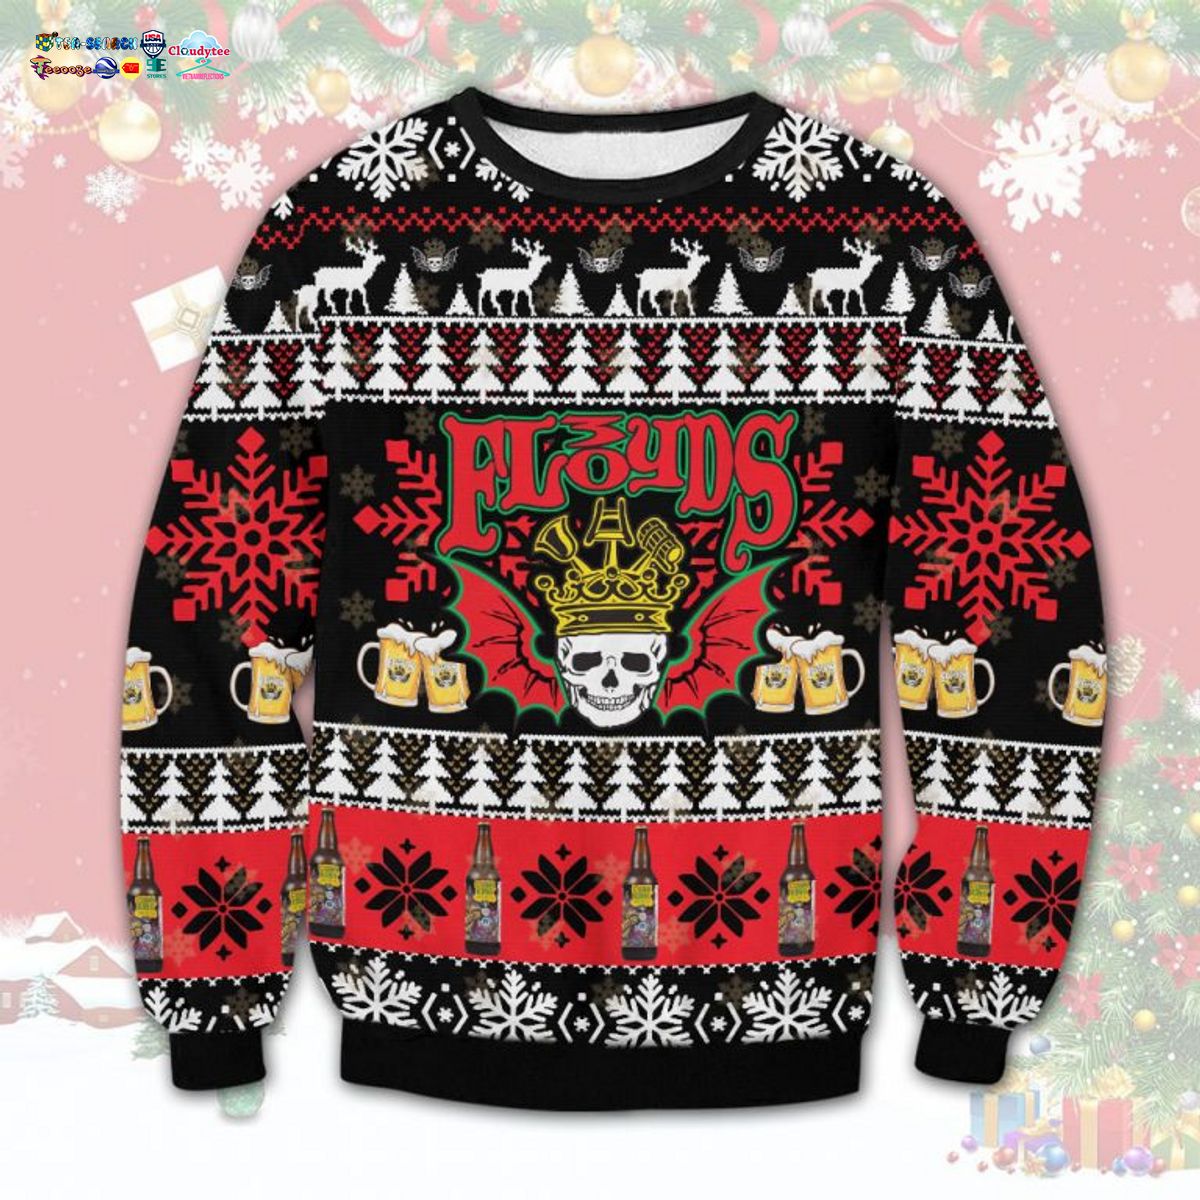 3 Floyds Ugly Christmas Sweater